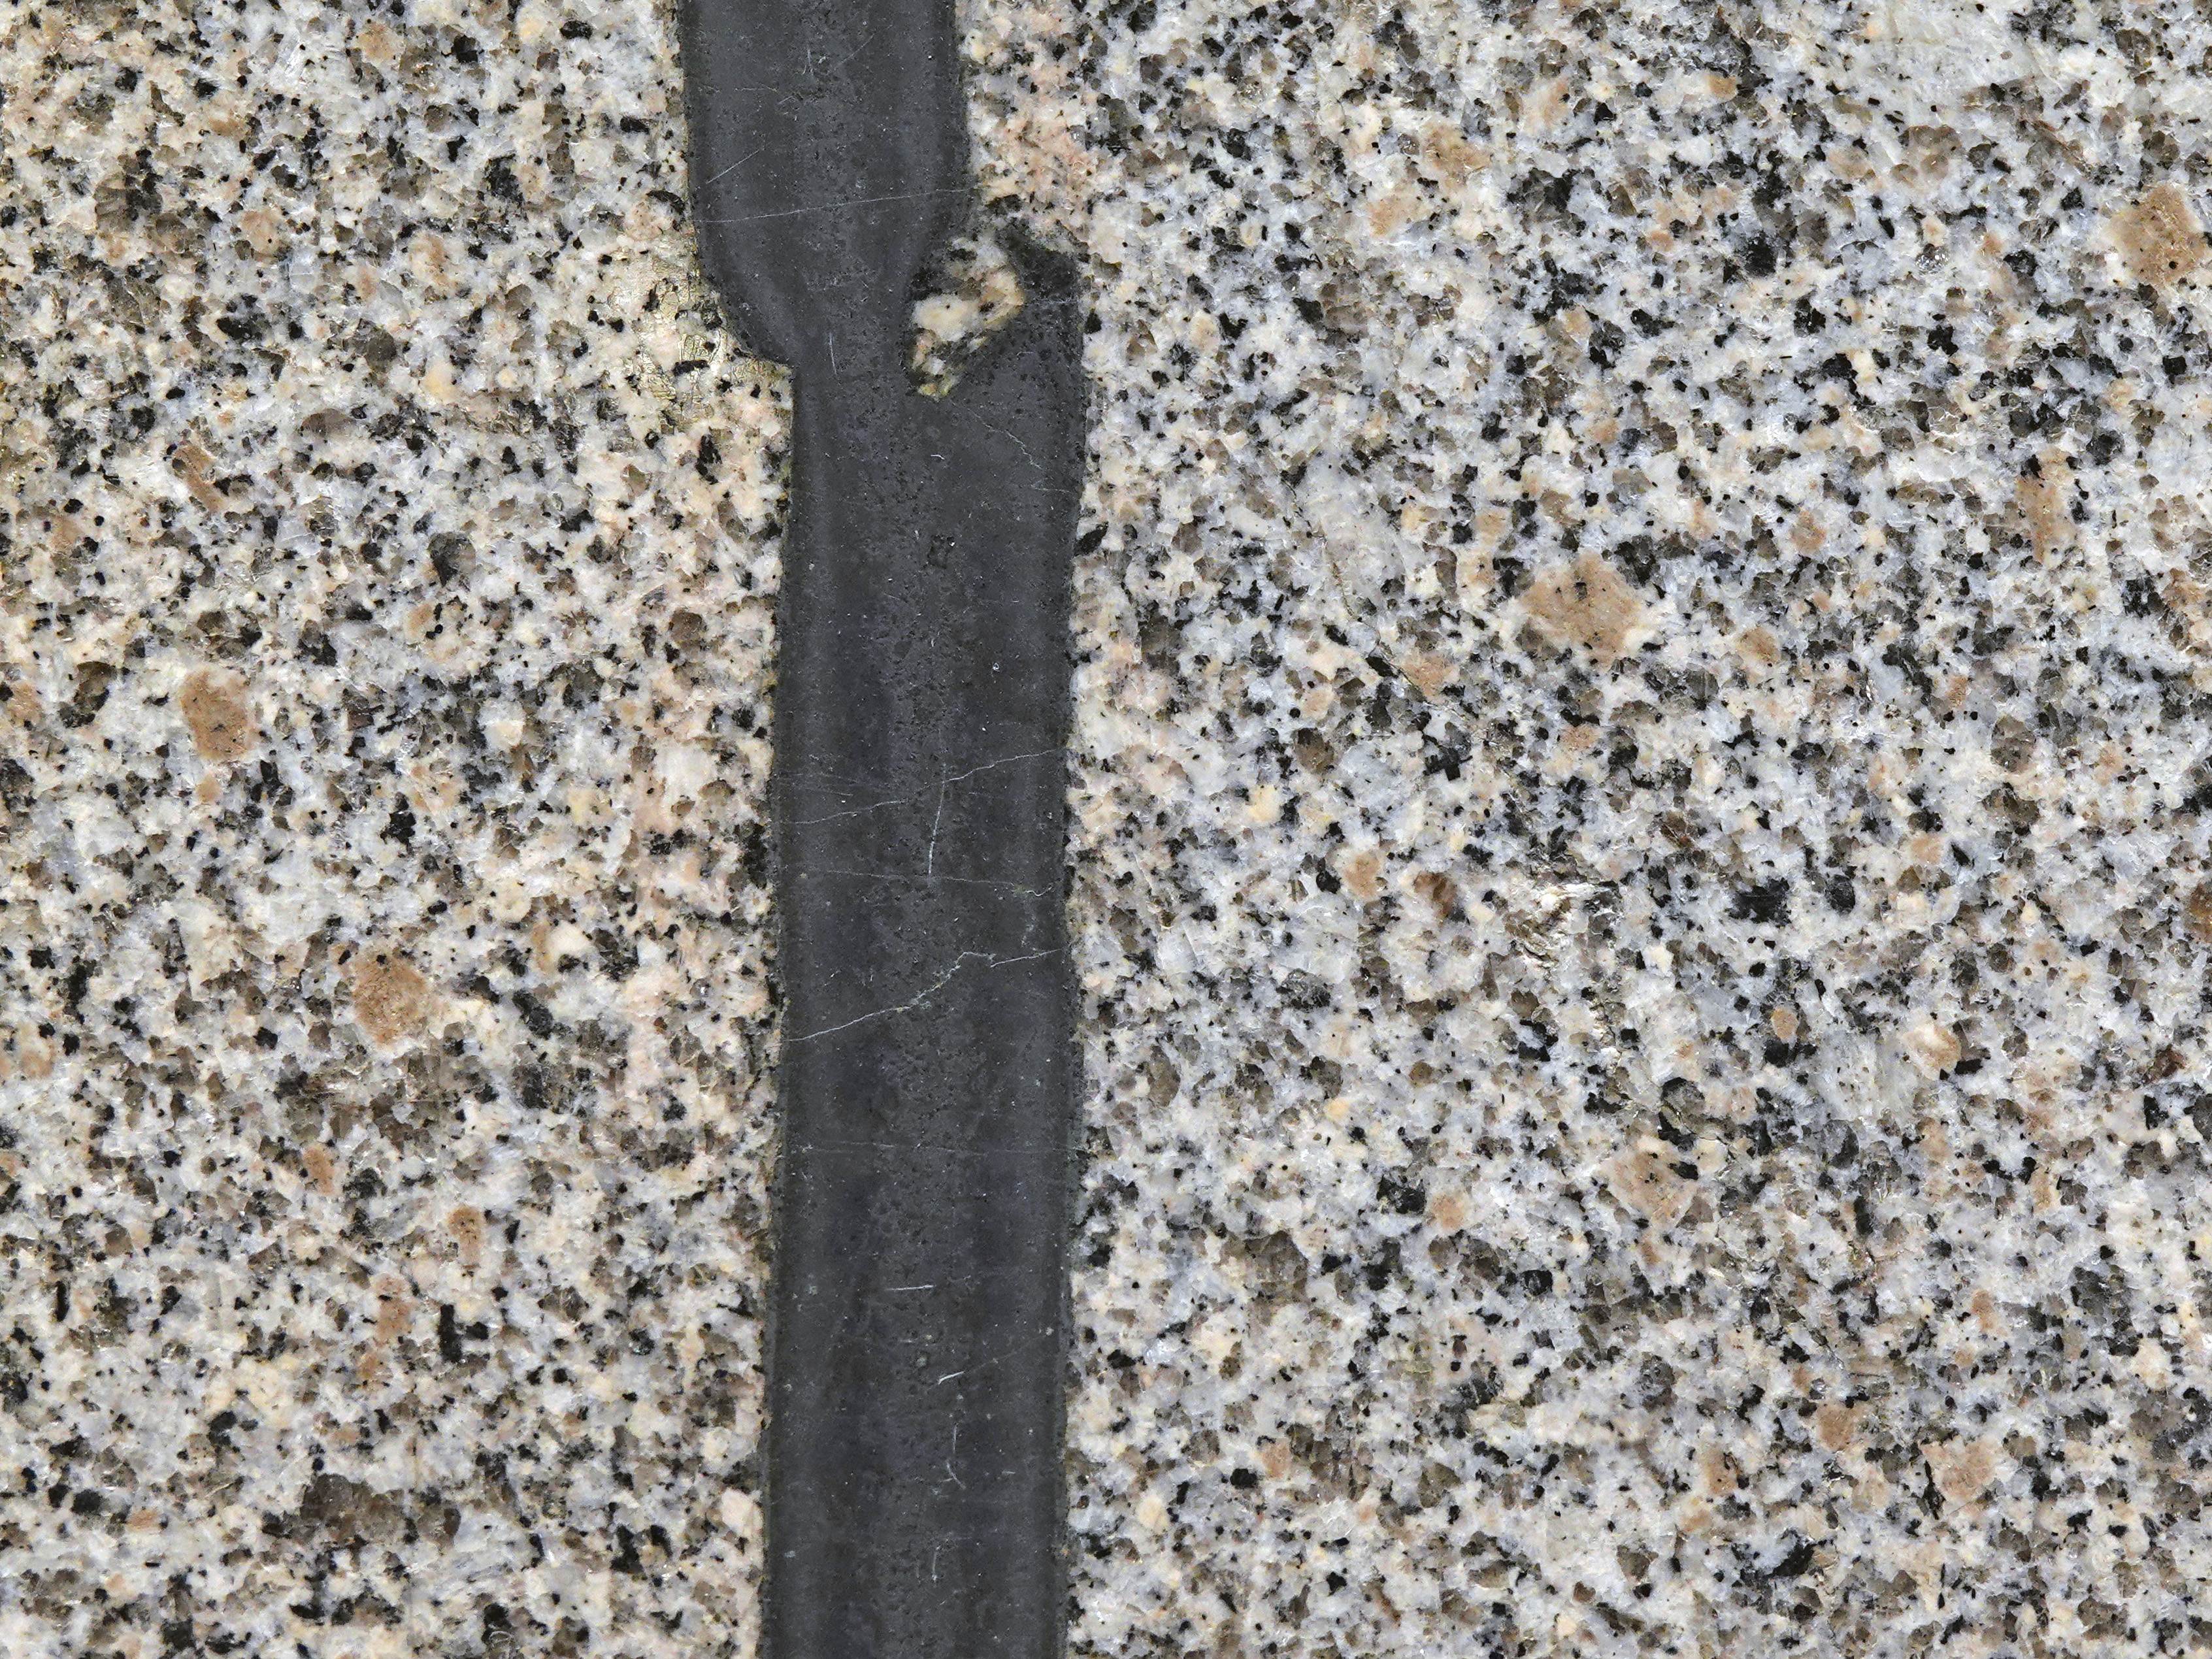 Mafic Dike cross-cutting granite